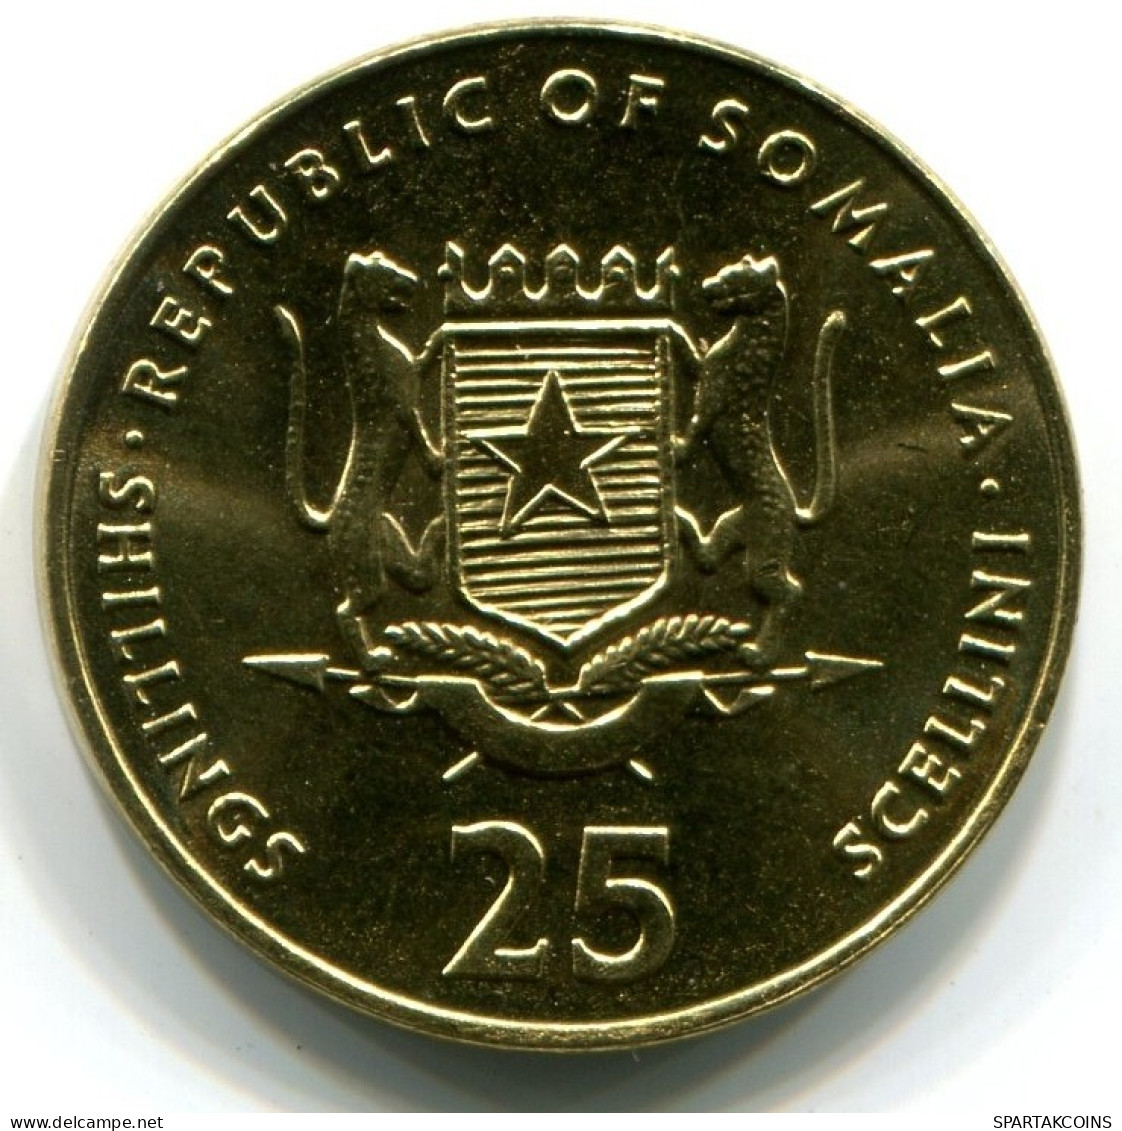 25 SHILLINGS 2001 SOMALIA UNC Soccer Player Coin #W11229.U.A - Somalië